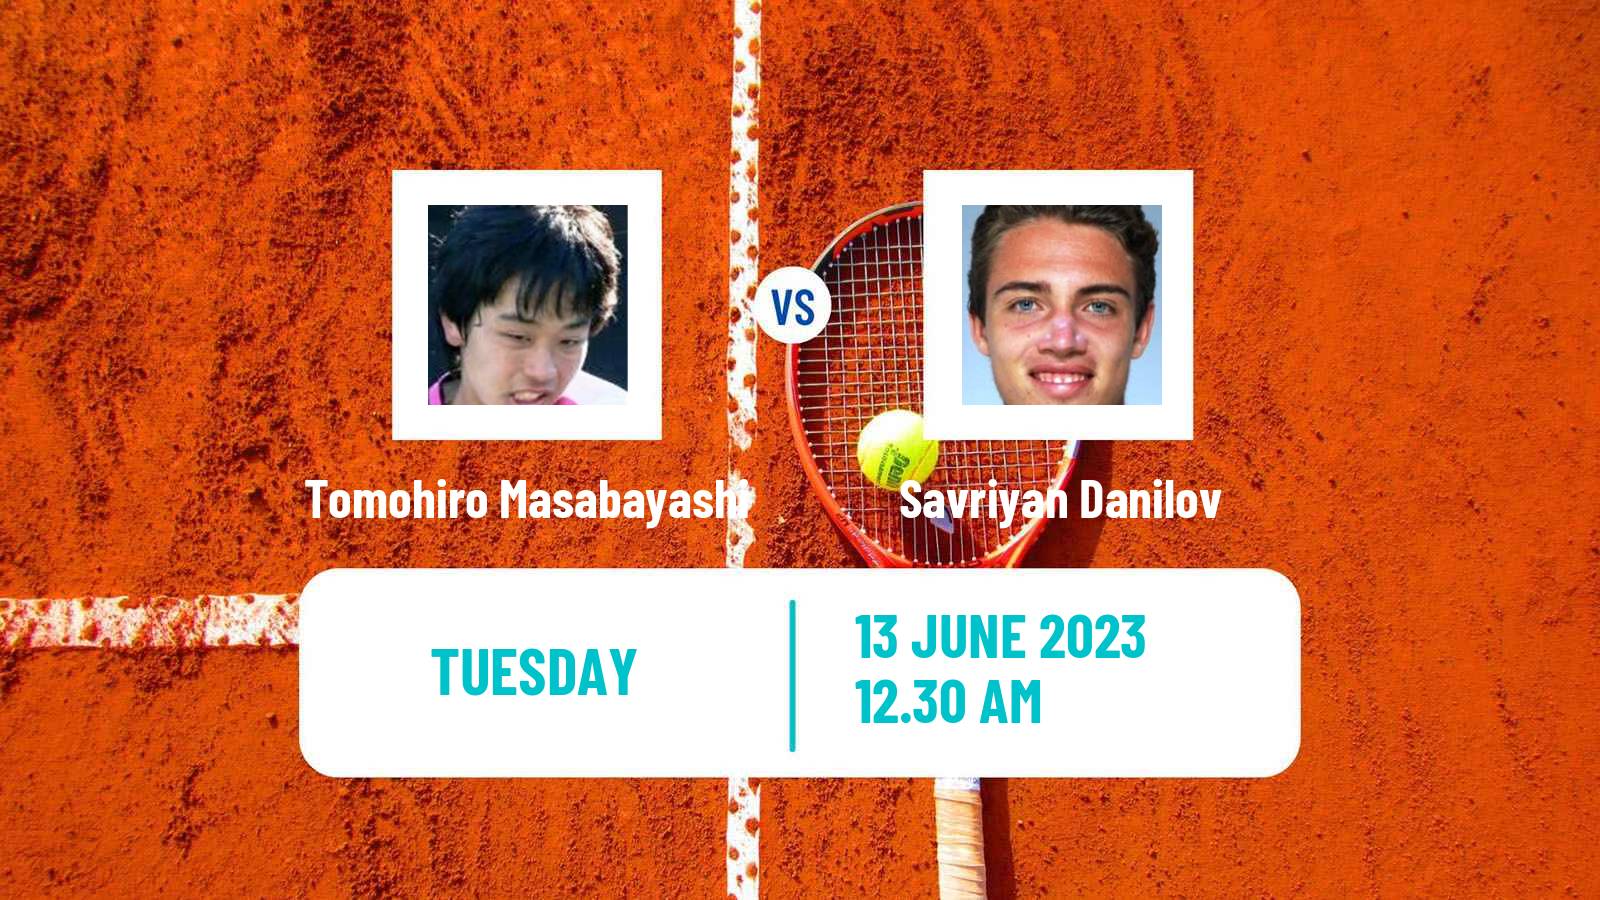 Tennis ITF M15 Jakarta 3 Men Tomohiro Masabayashi - Savriyan Danilov